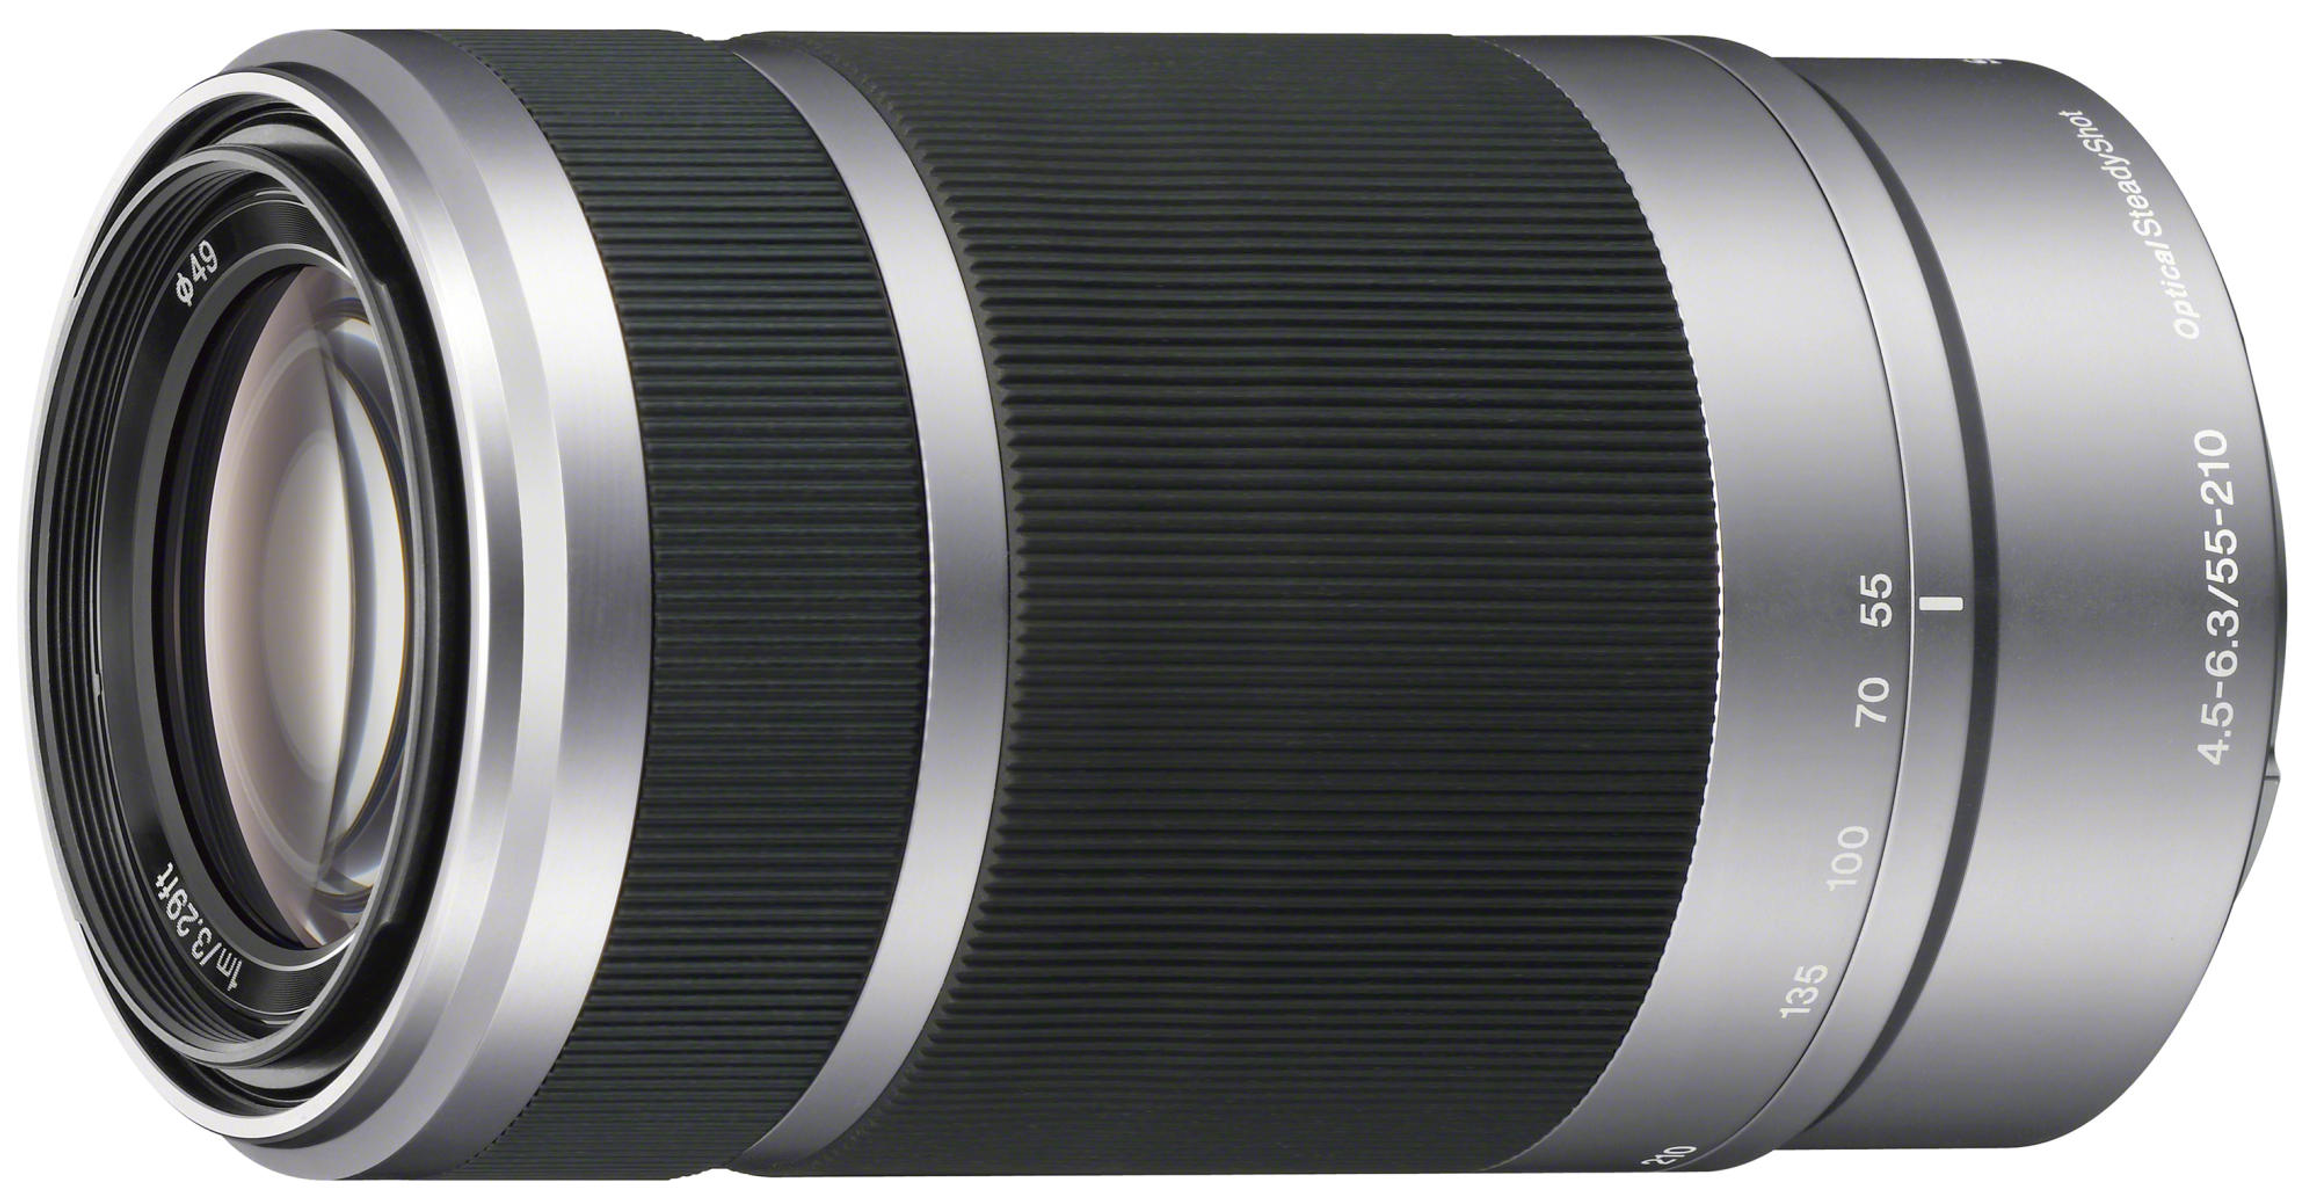 SONY SEL mm 55210 Circulare für - F4,5-6,3/55-210MM mm 210 f/4.5-6.3 Silber) Blende OSS, E-Mount, (Objektiv SILBER Sony 55